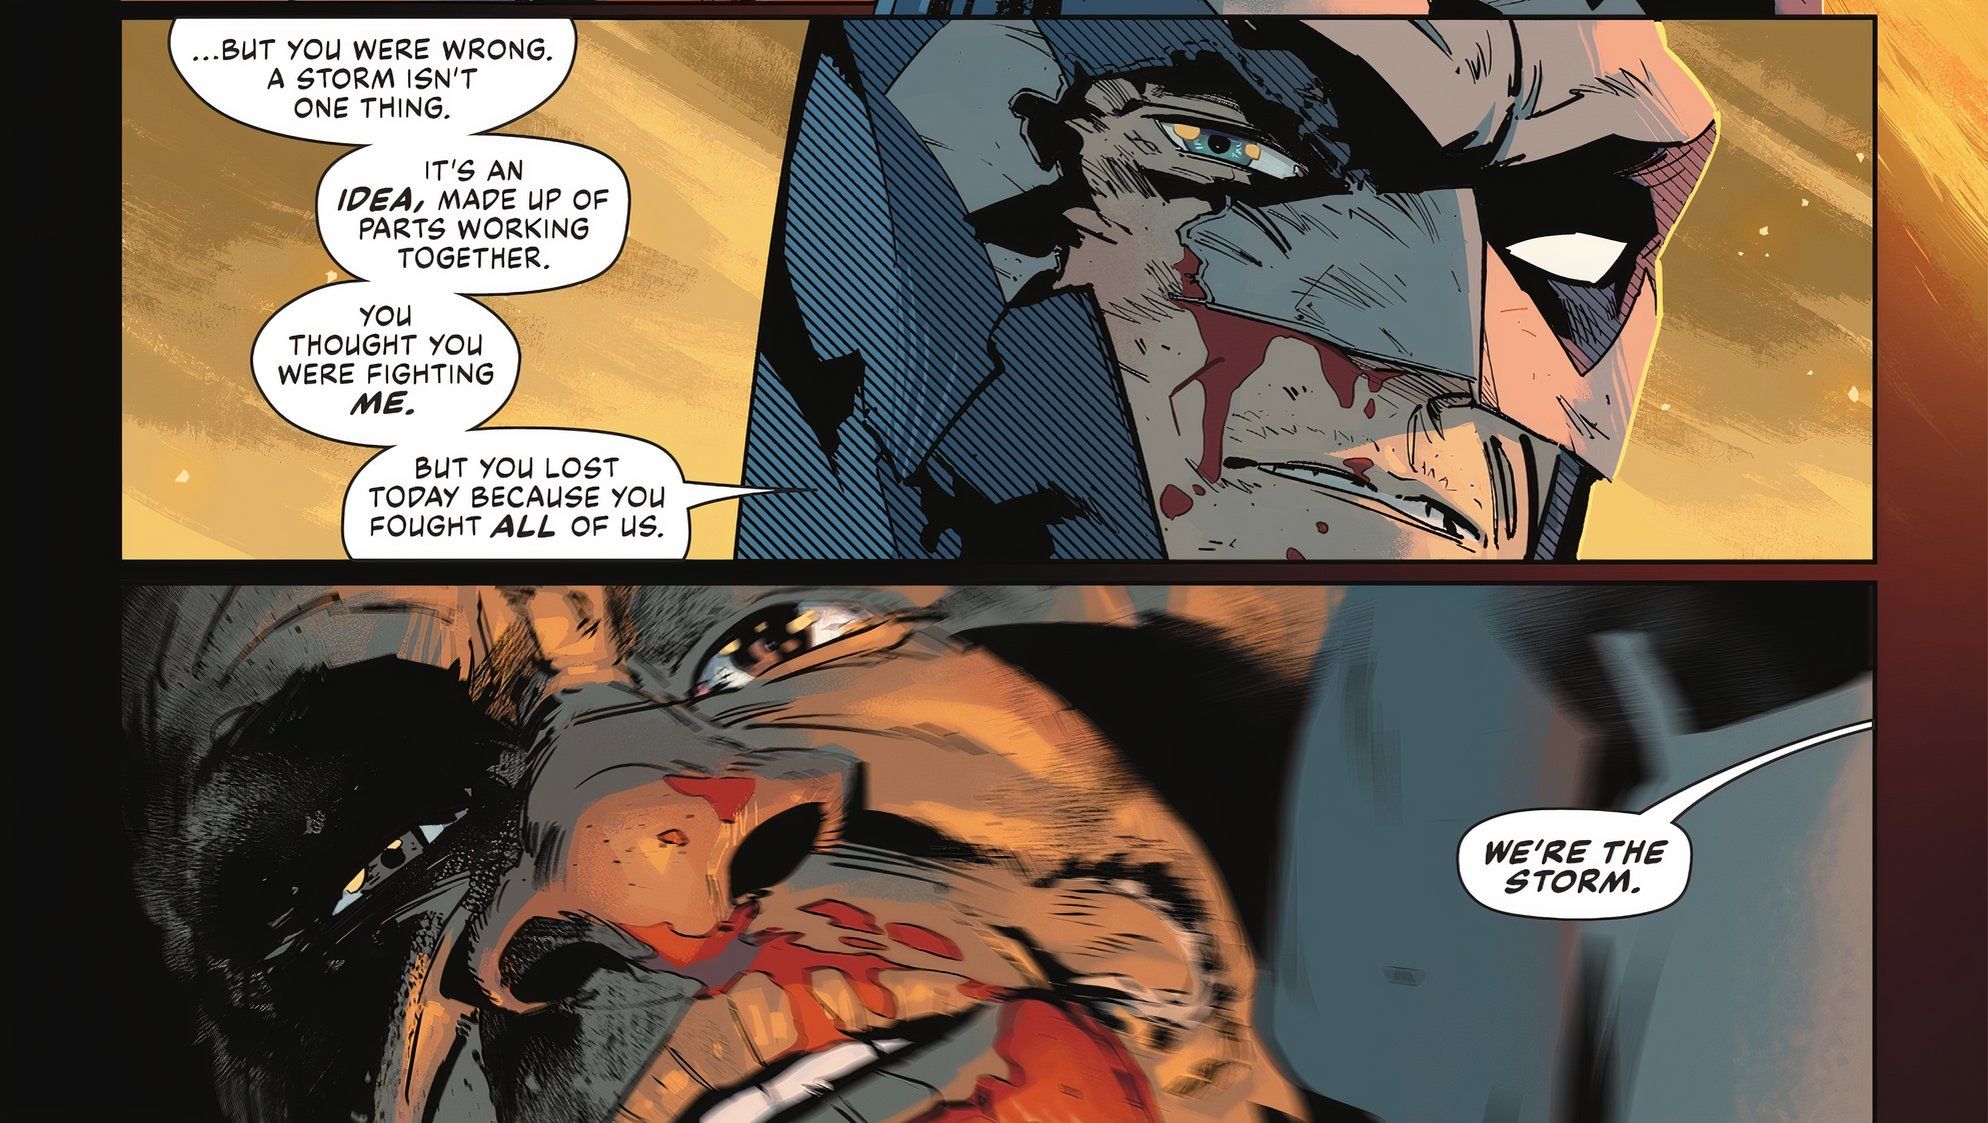 Batman #148 Bruce Wayne monologuing about being the storm part 2